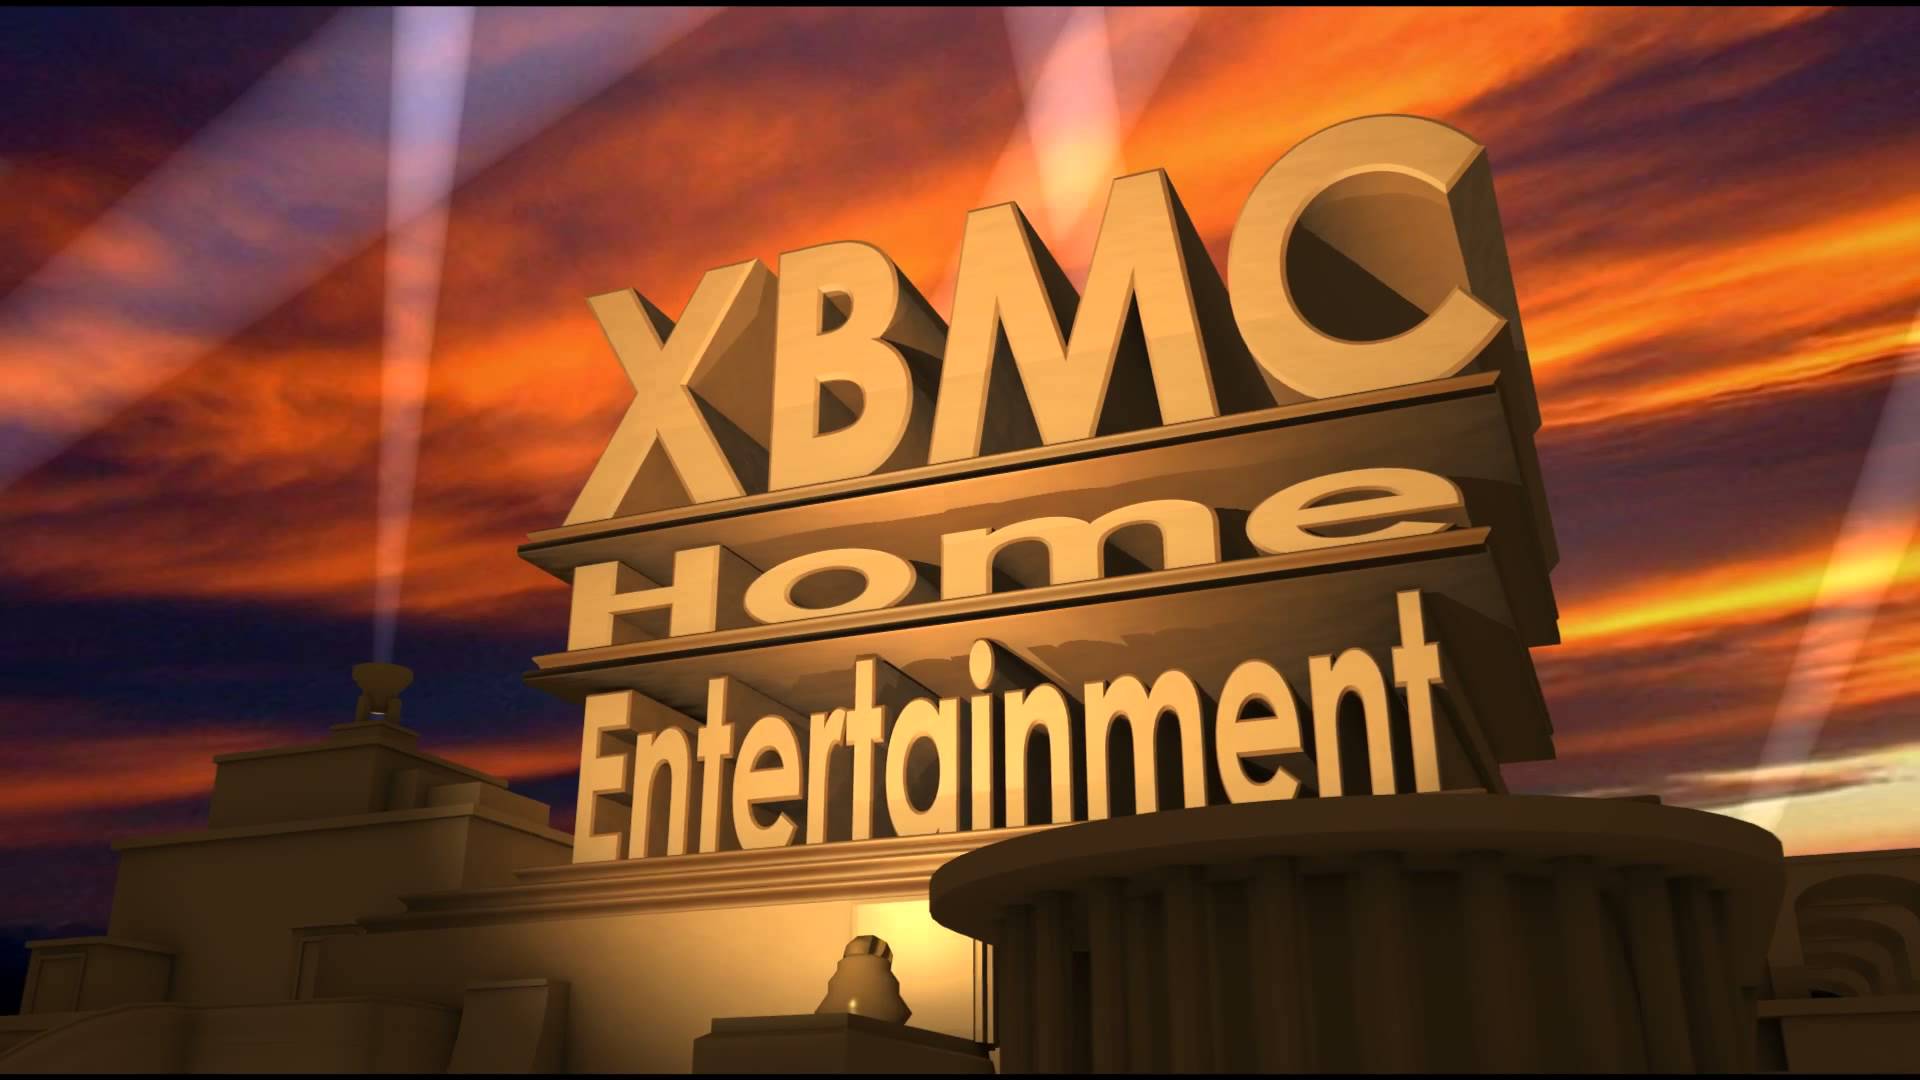 XBMC Cinema Experience Intro - YouTube